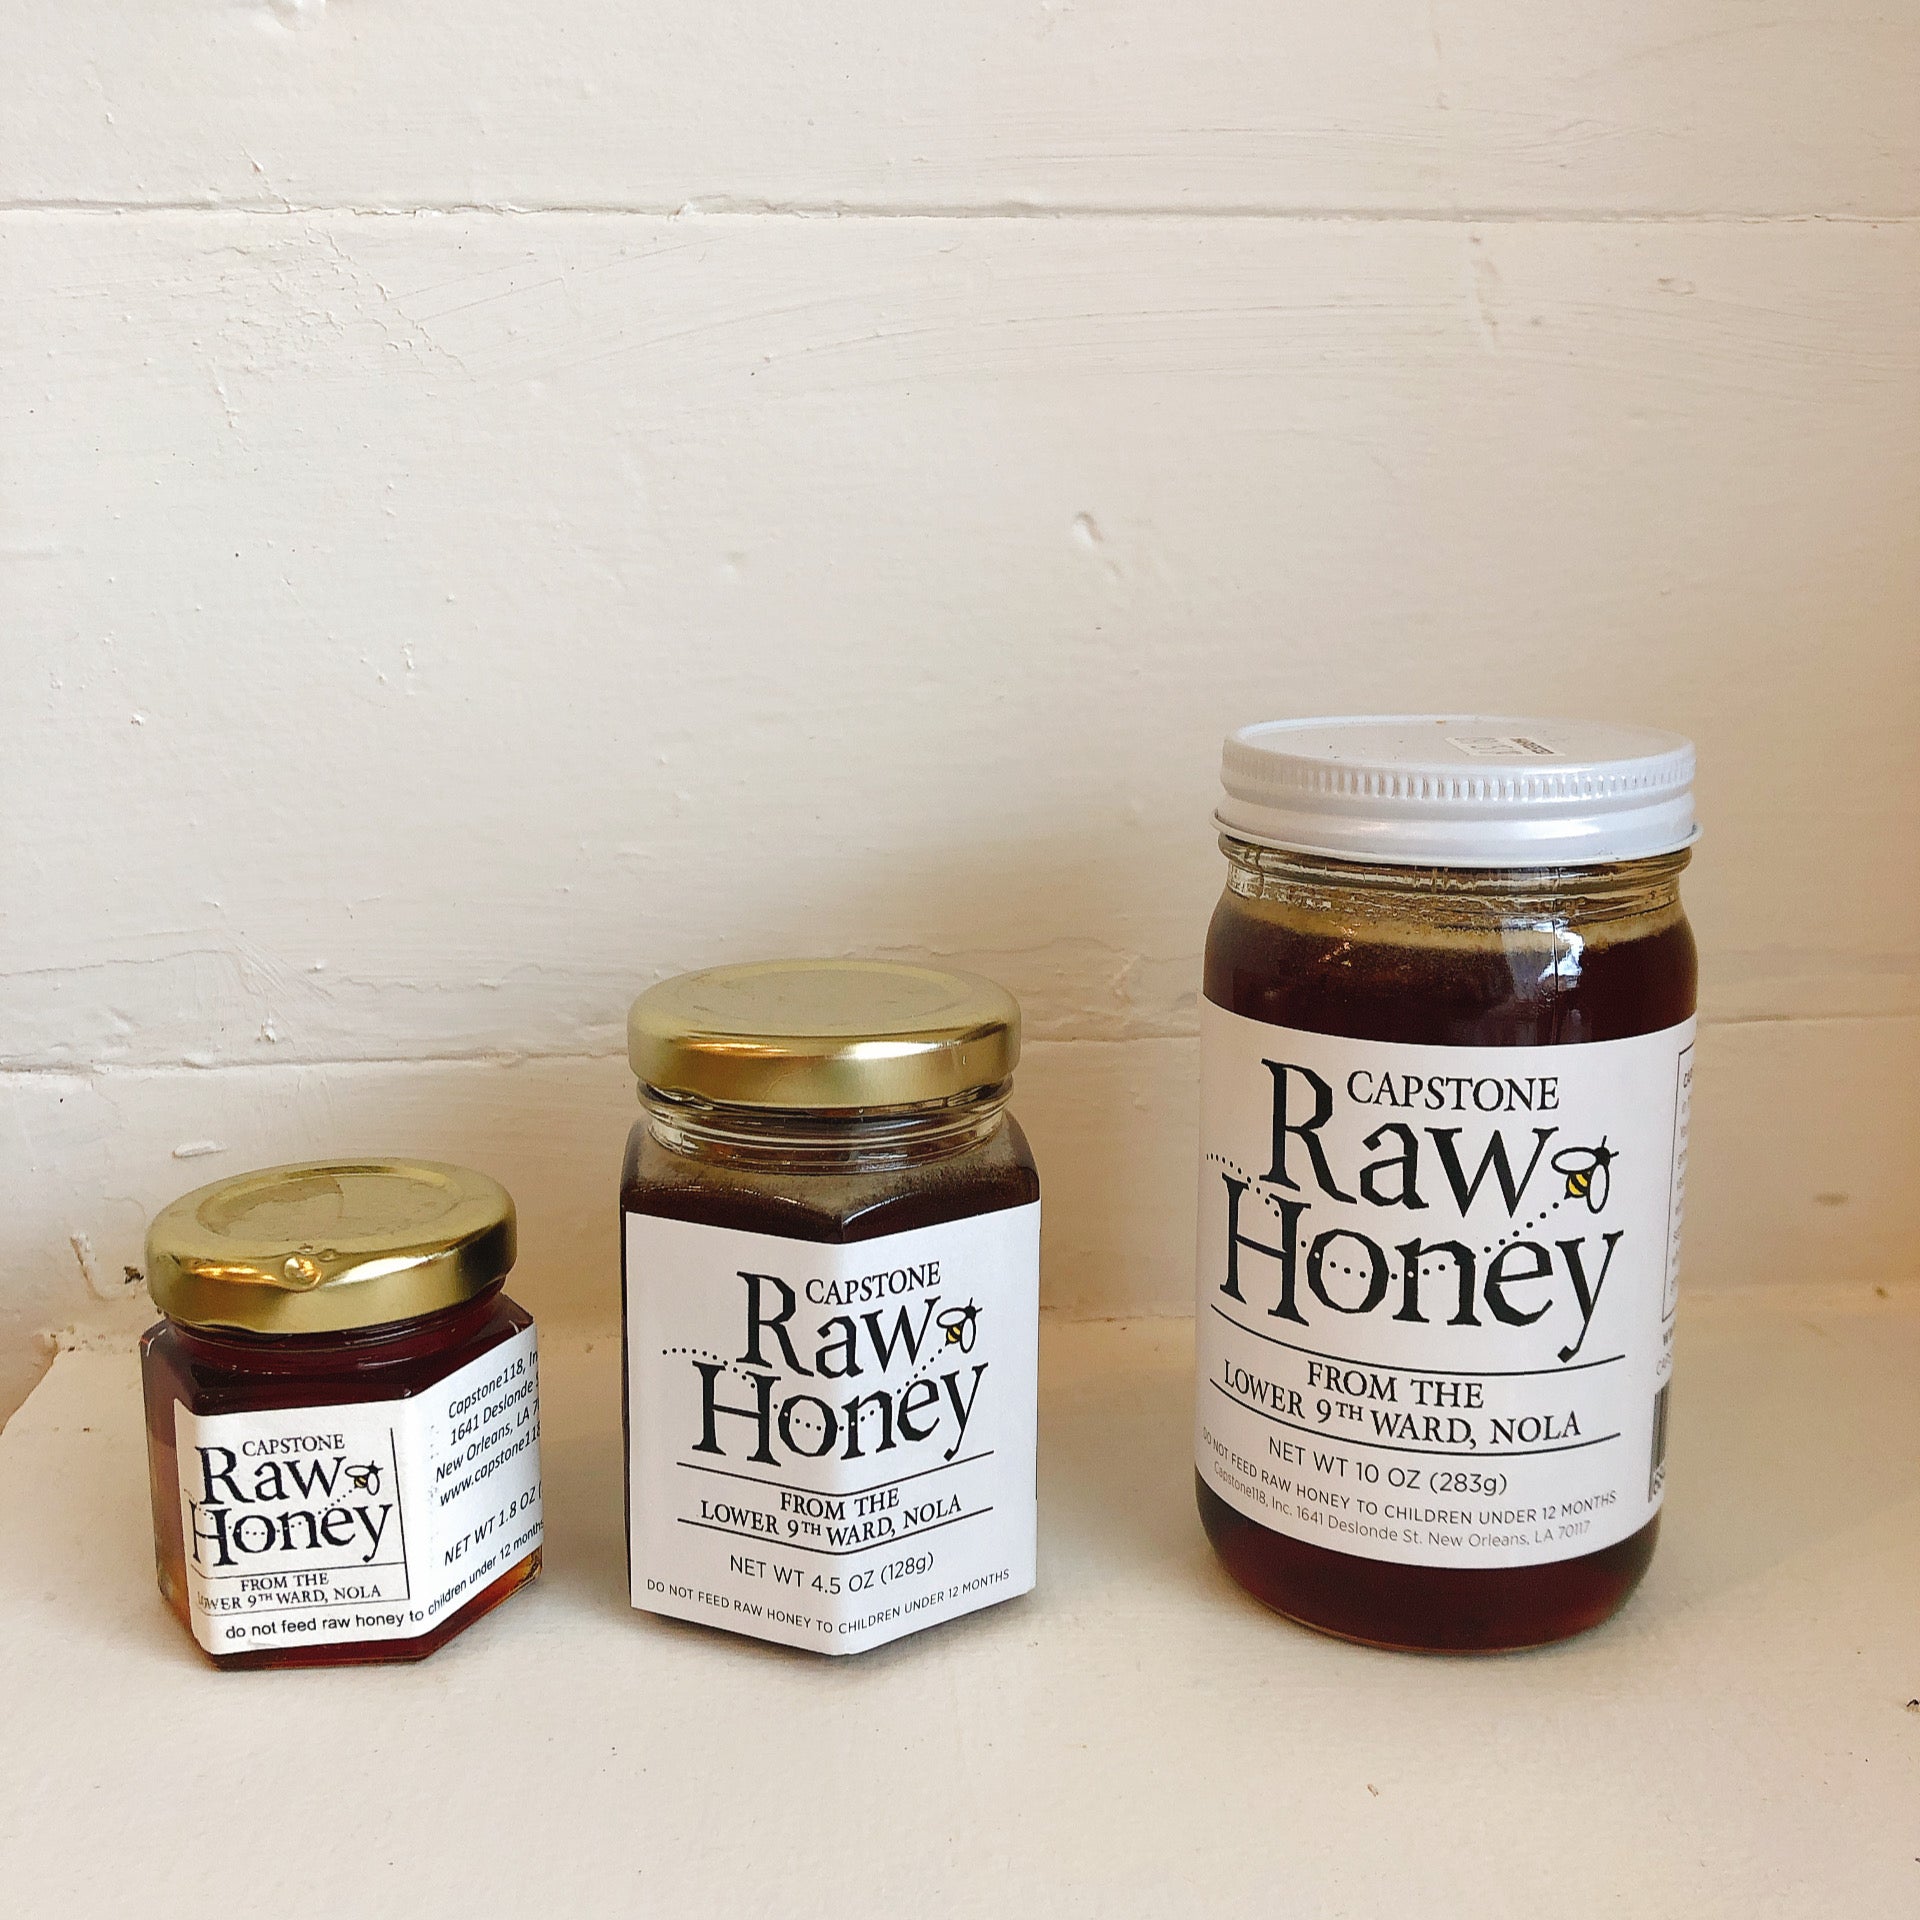 Capstone Honey - Local New Orleans Honey